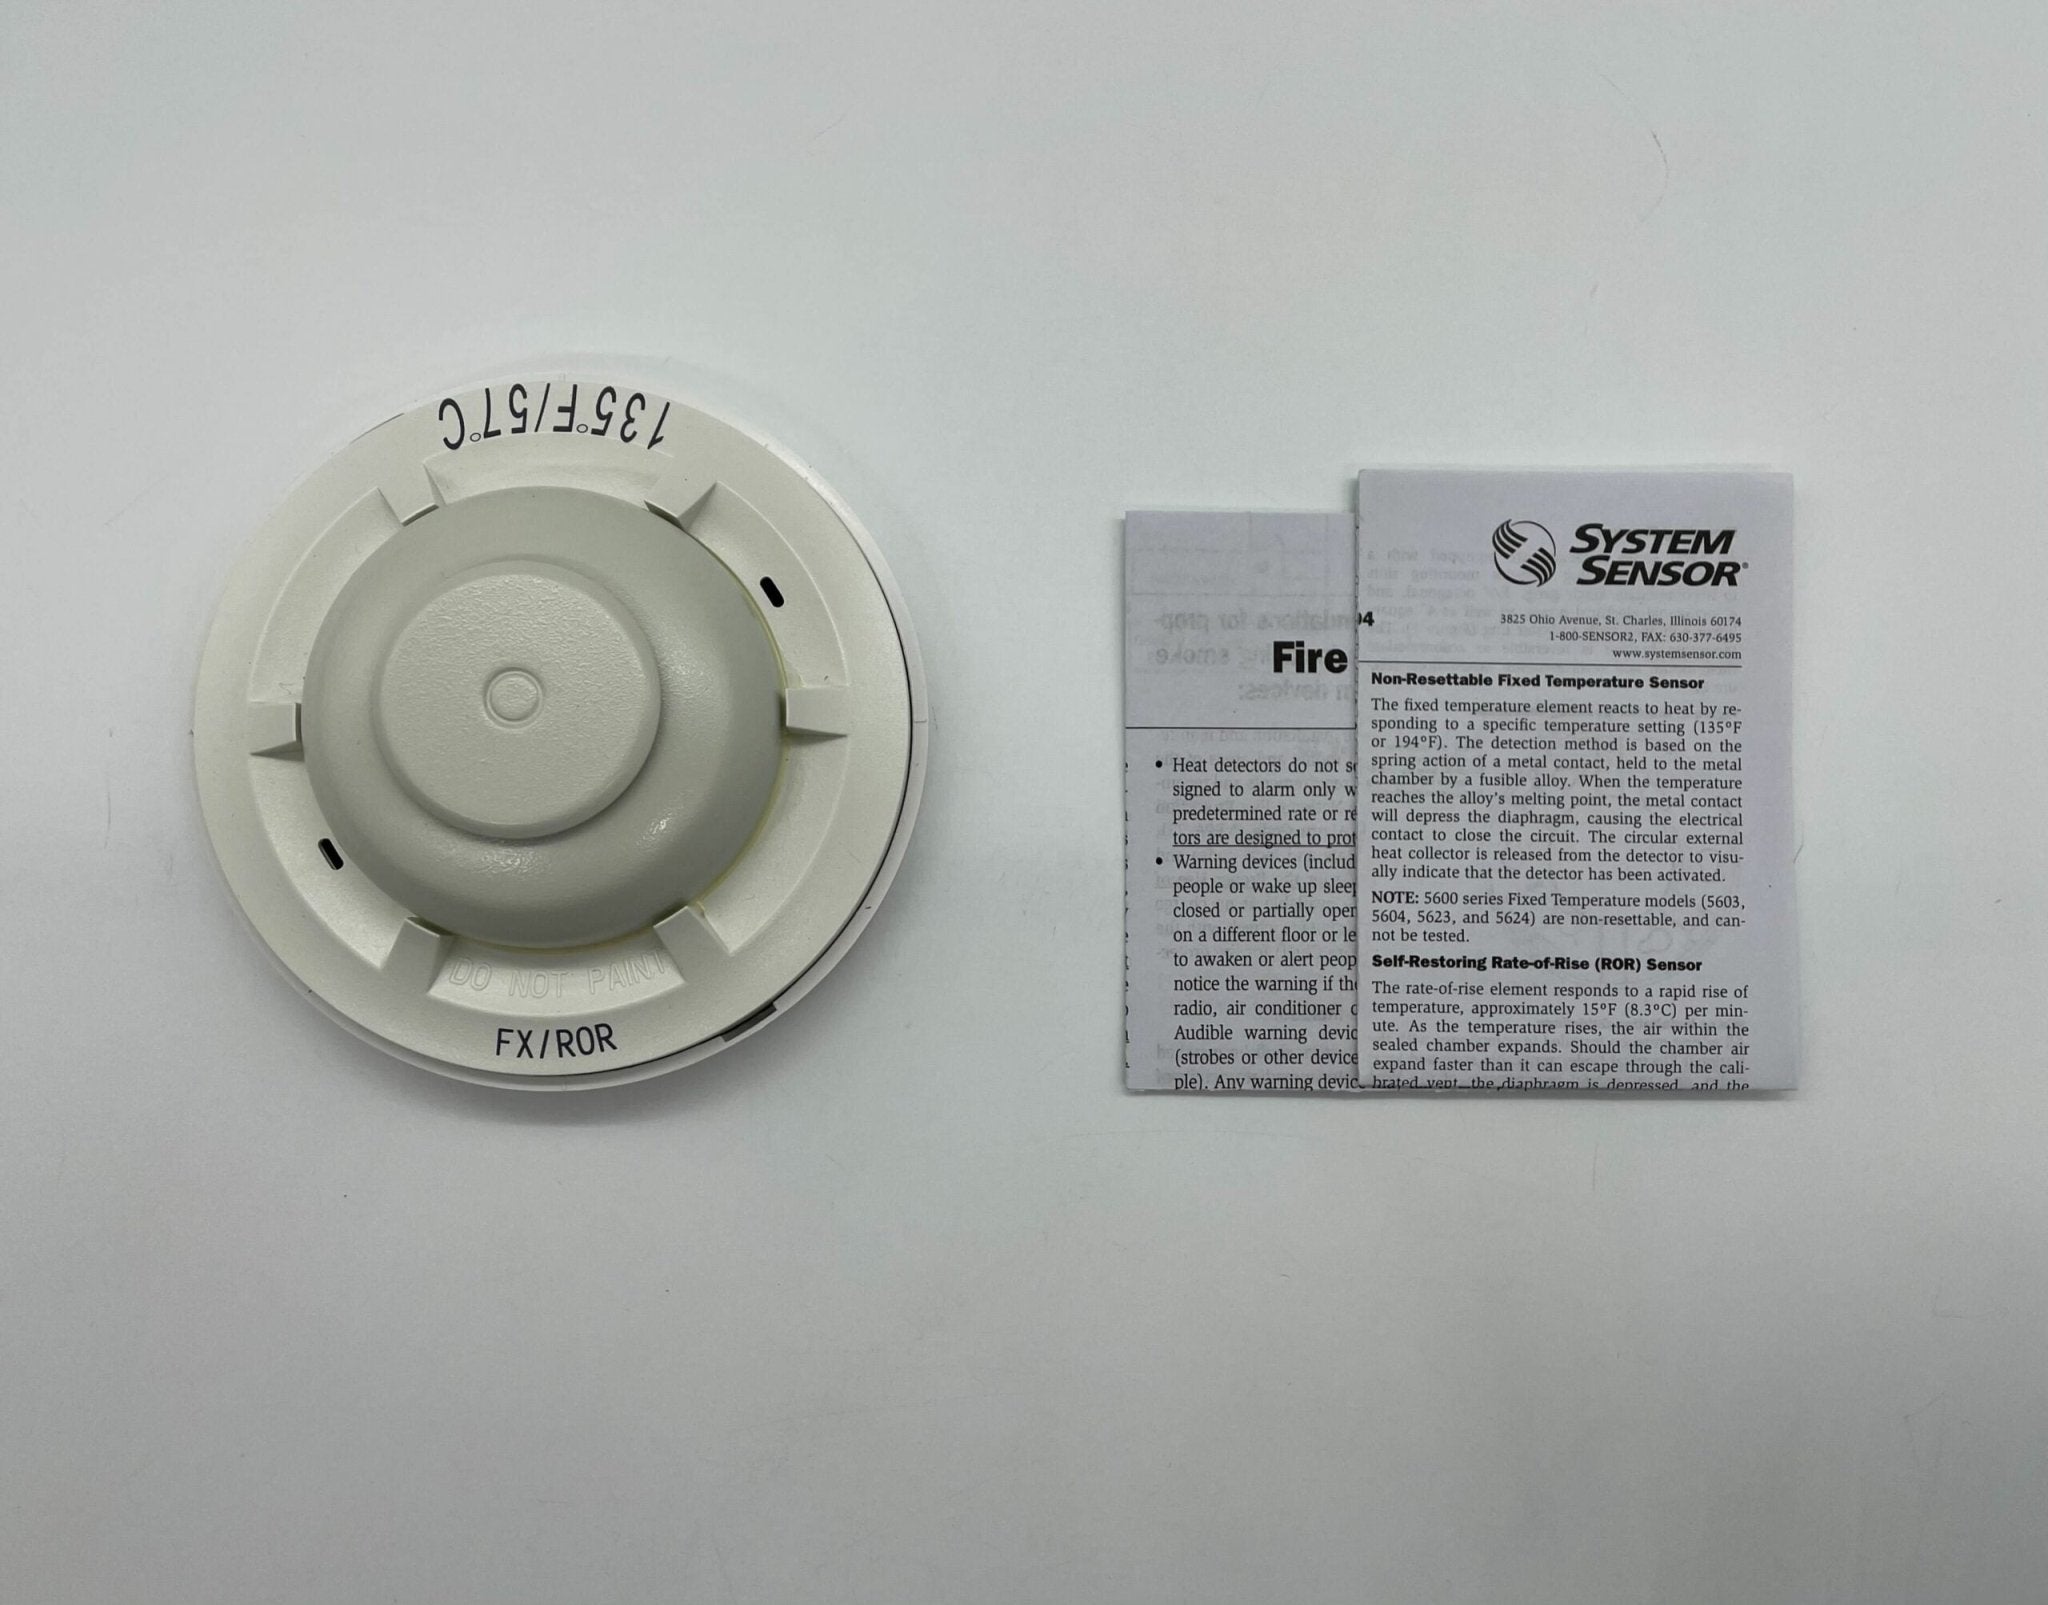 System Sensor 5621 - The Fire Alarm Supplier